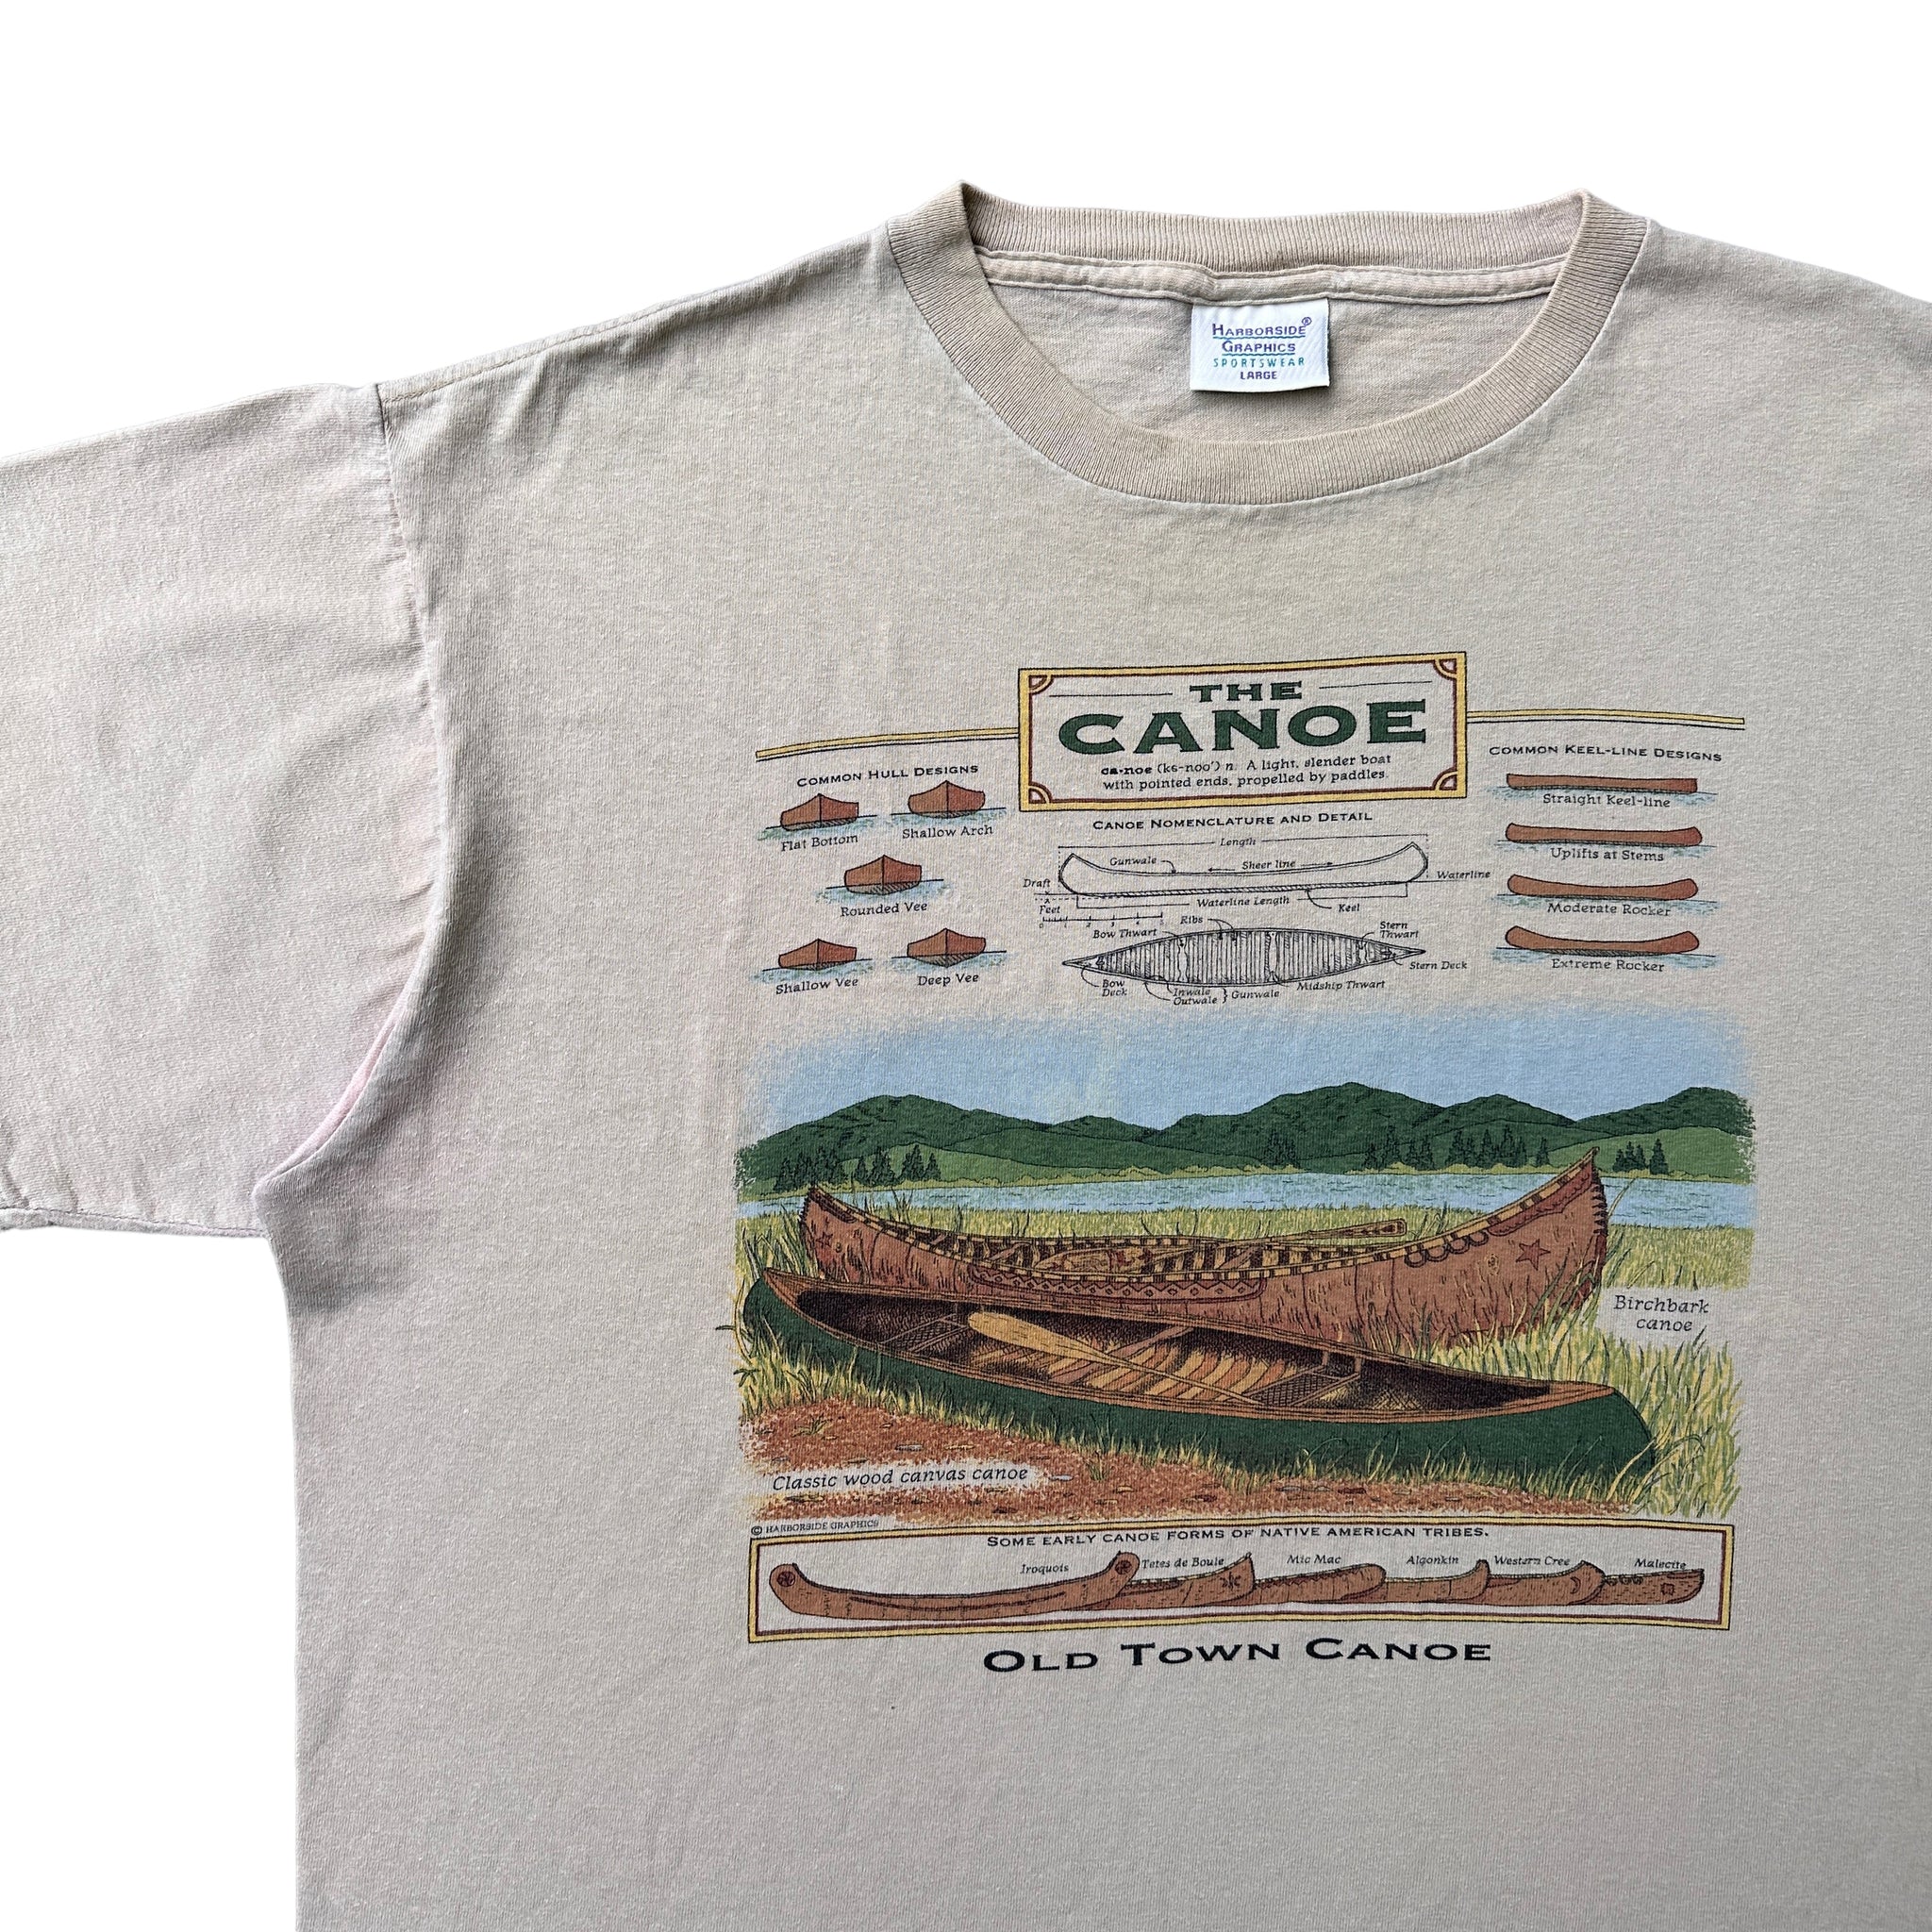 90s Canoe tee large